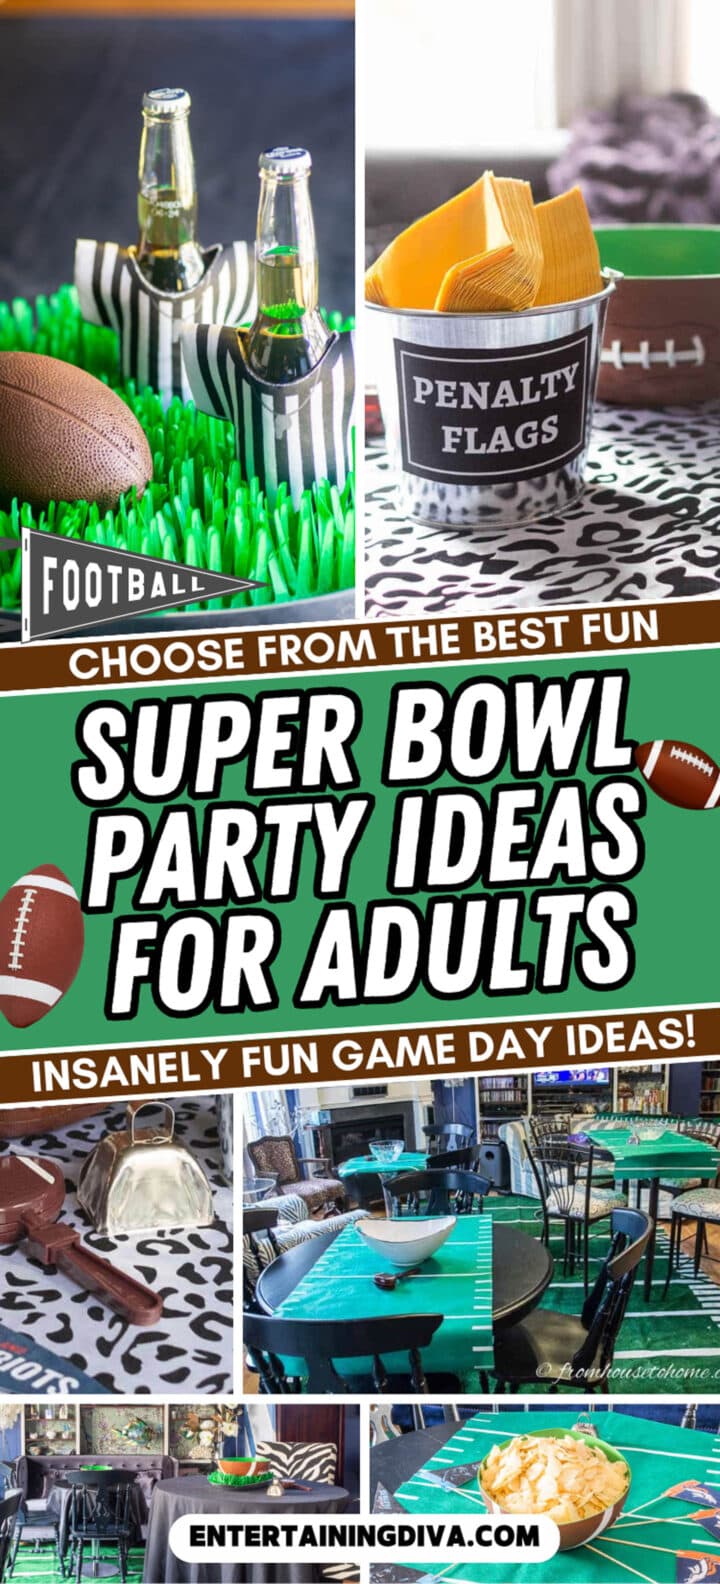 Adults, Super Bowl party ideas.